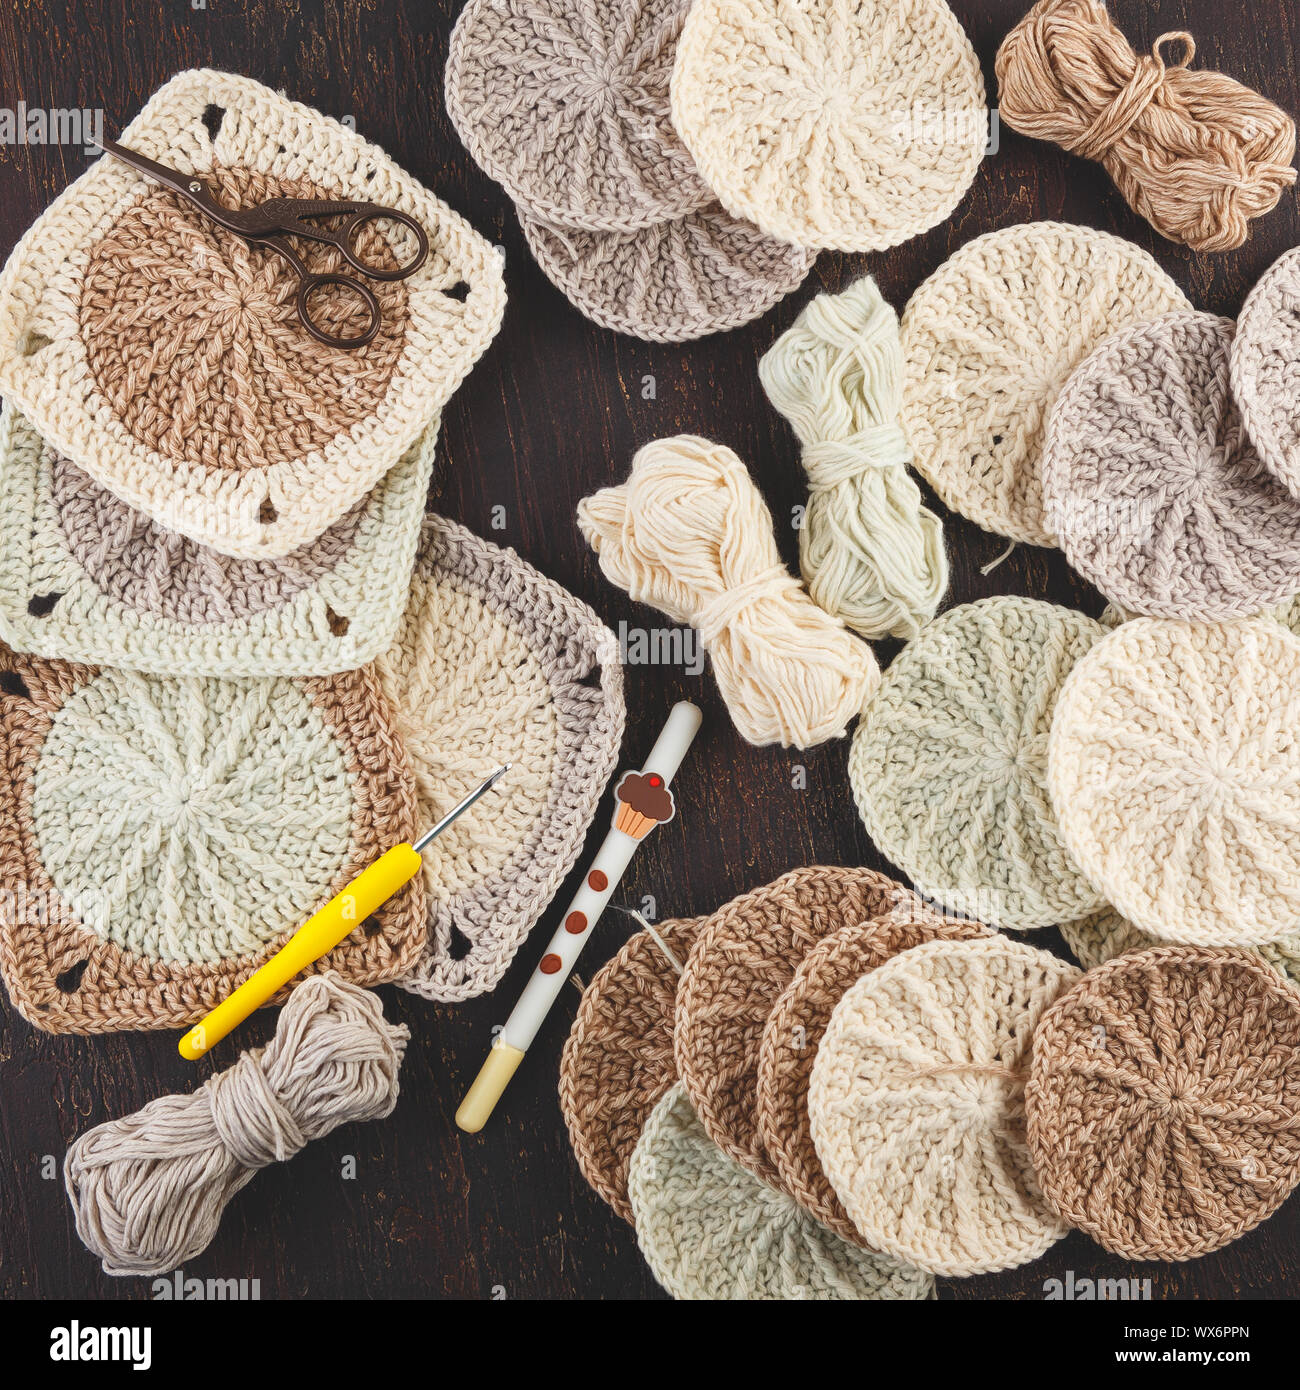 Crochet yarn, crochet hooks, and hand made granny squares. Stock Photo